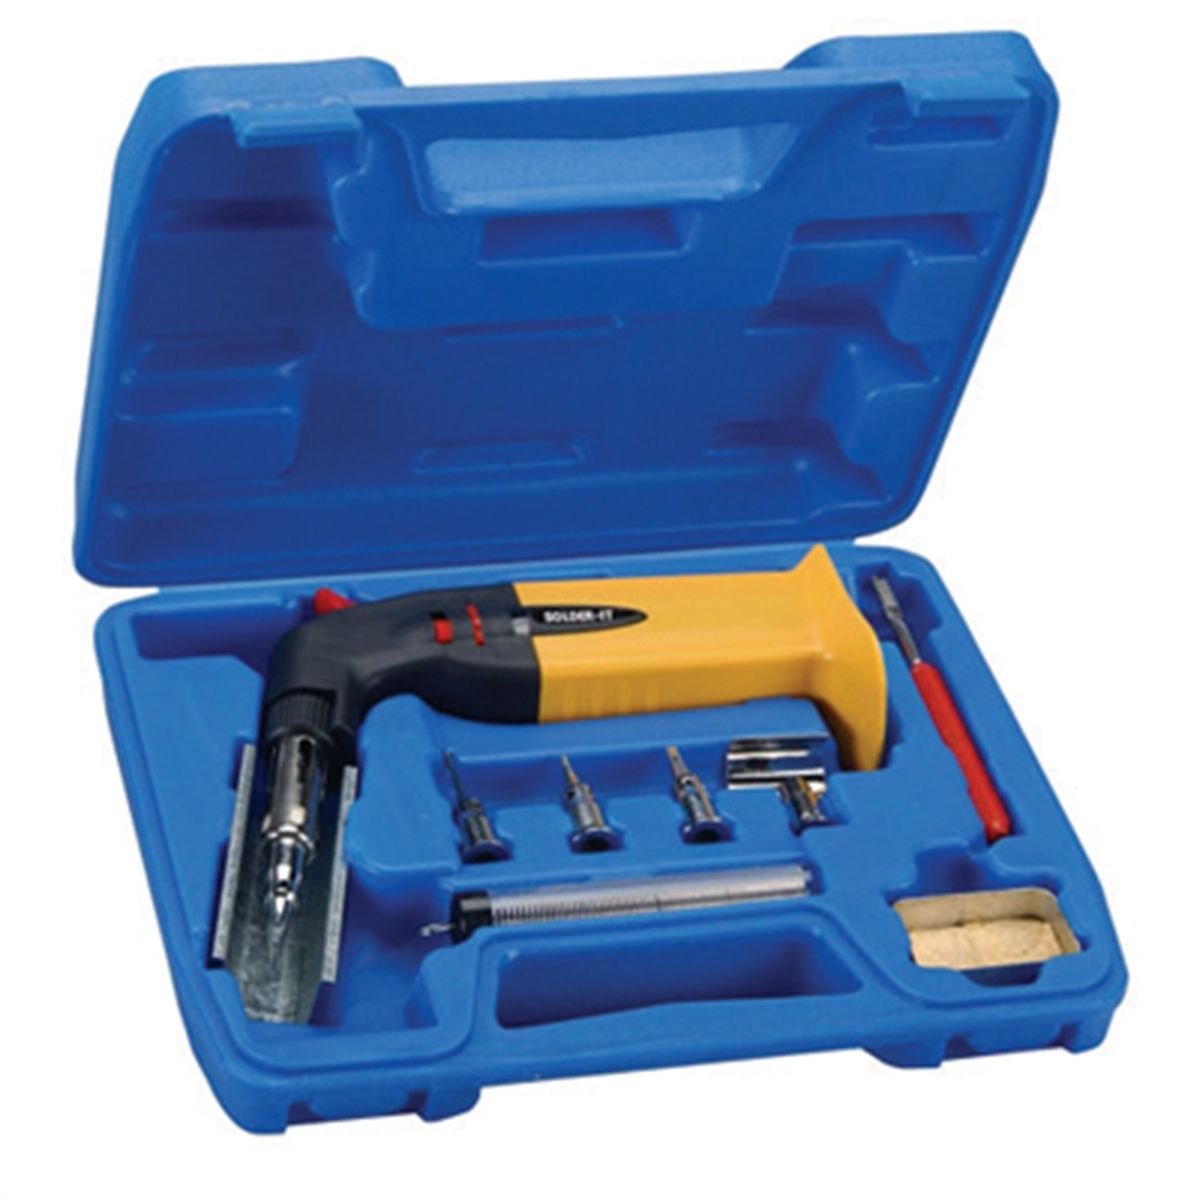 Solder Iron Workbench Kit